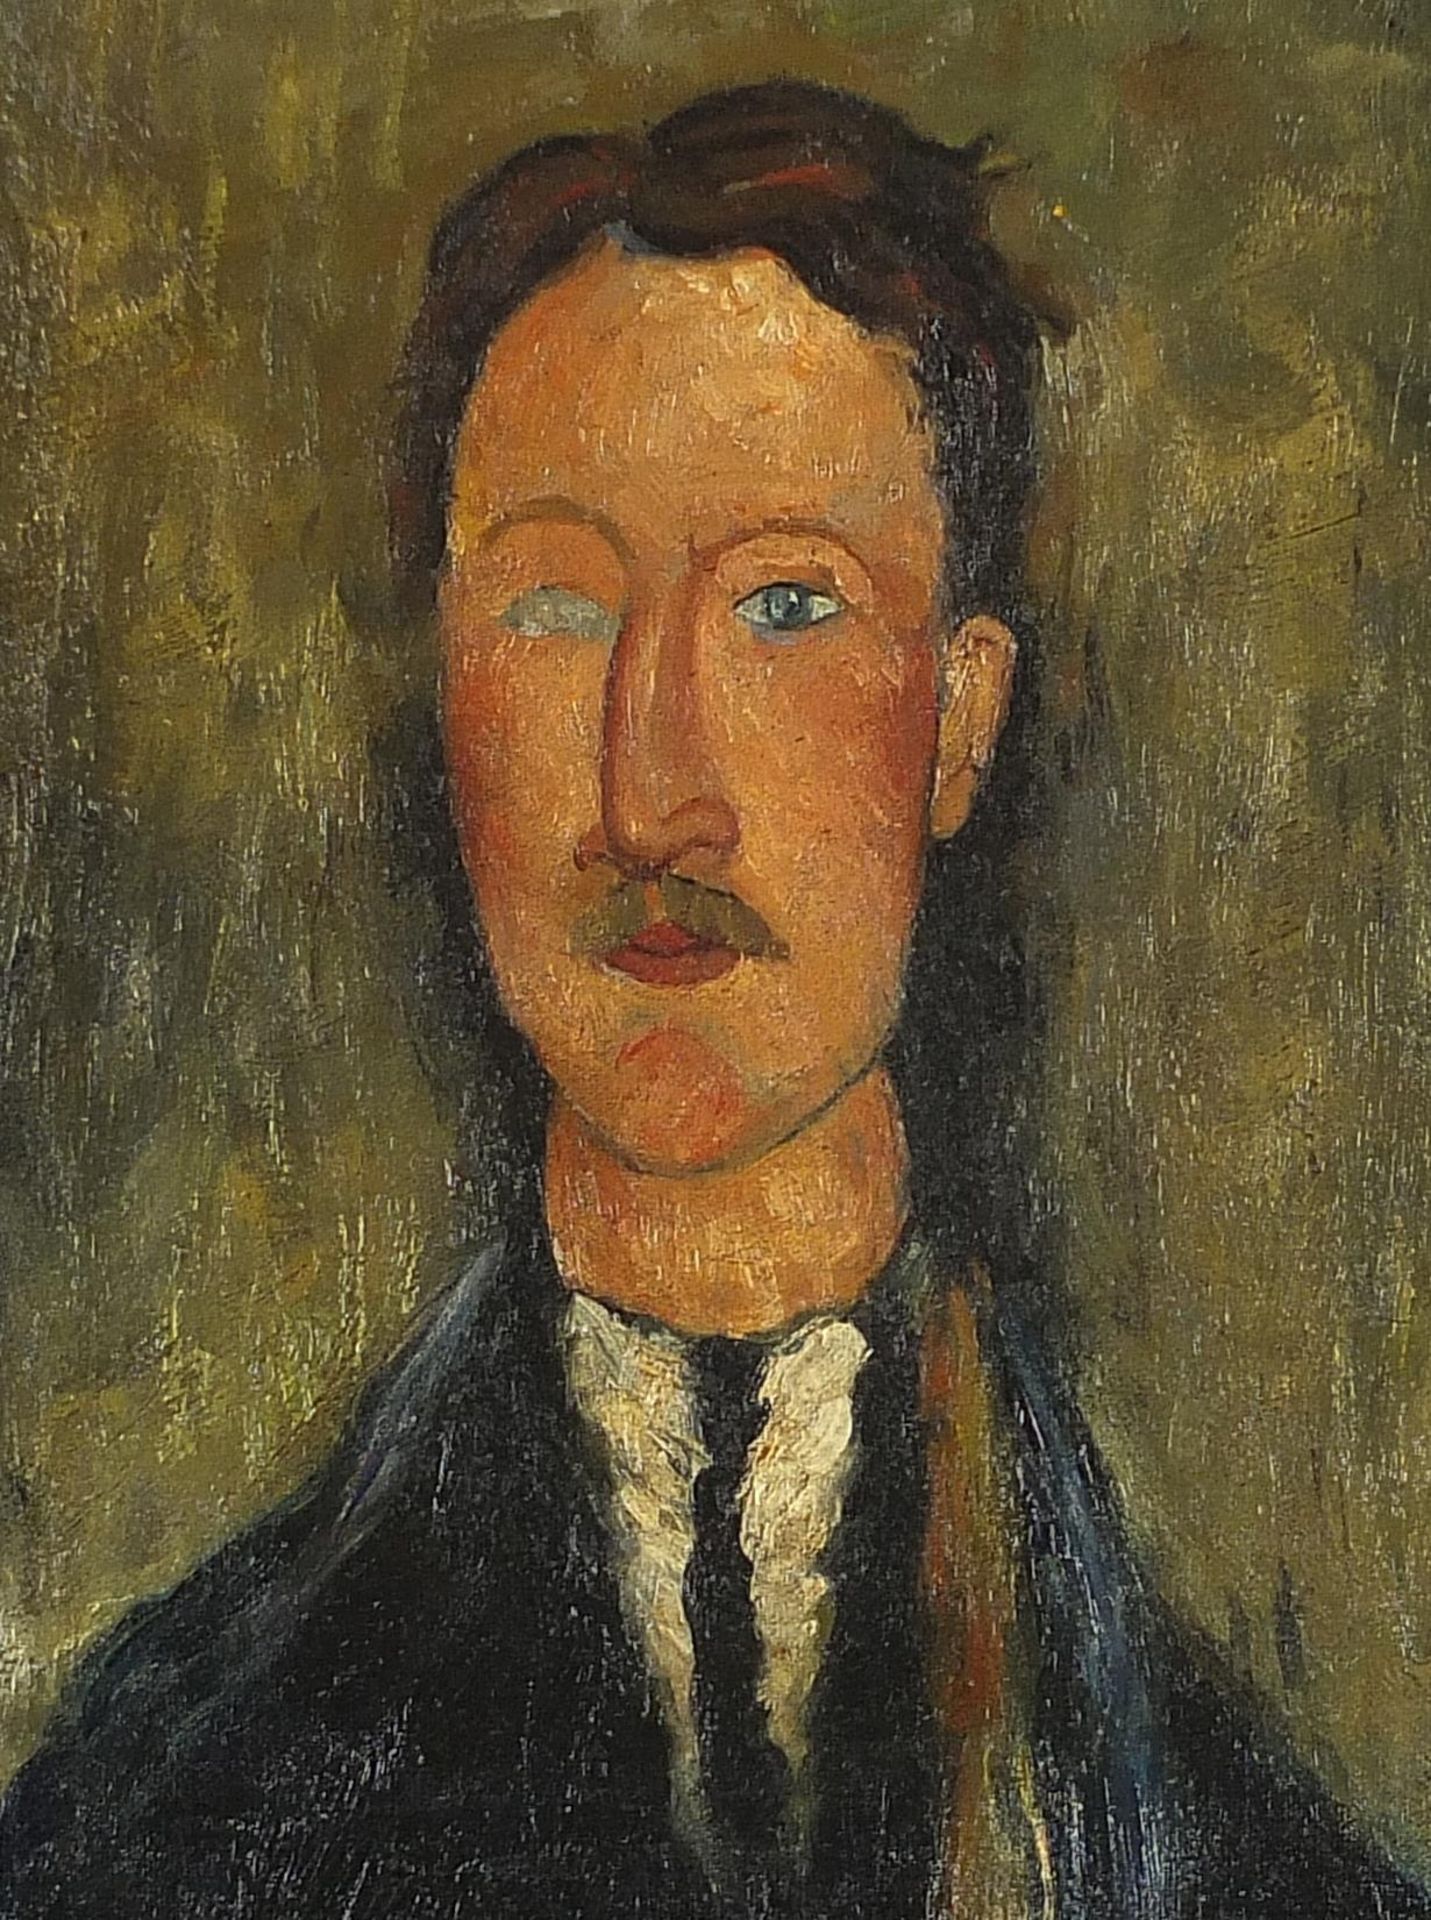 After Amedeo Modigliani - Head and shoulders portrait of a gentleman, Italian school oil on board,